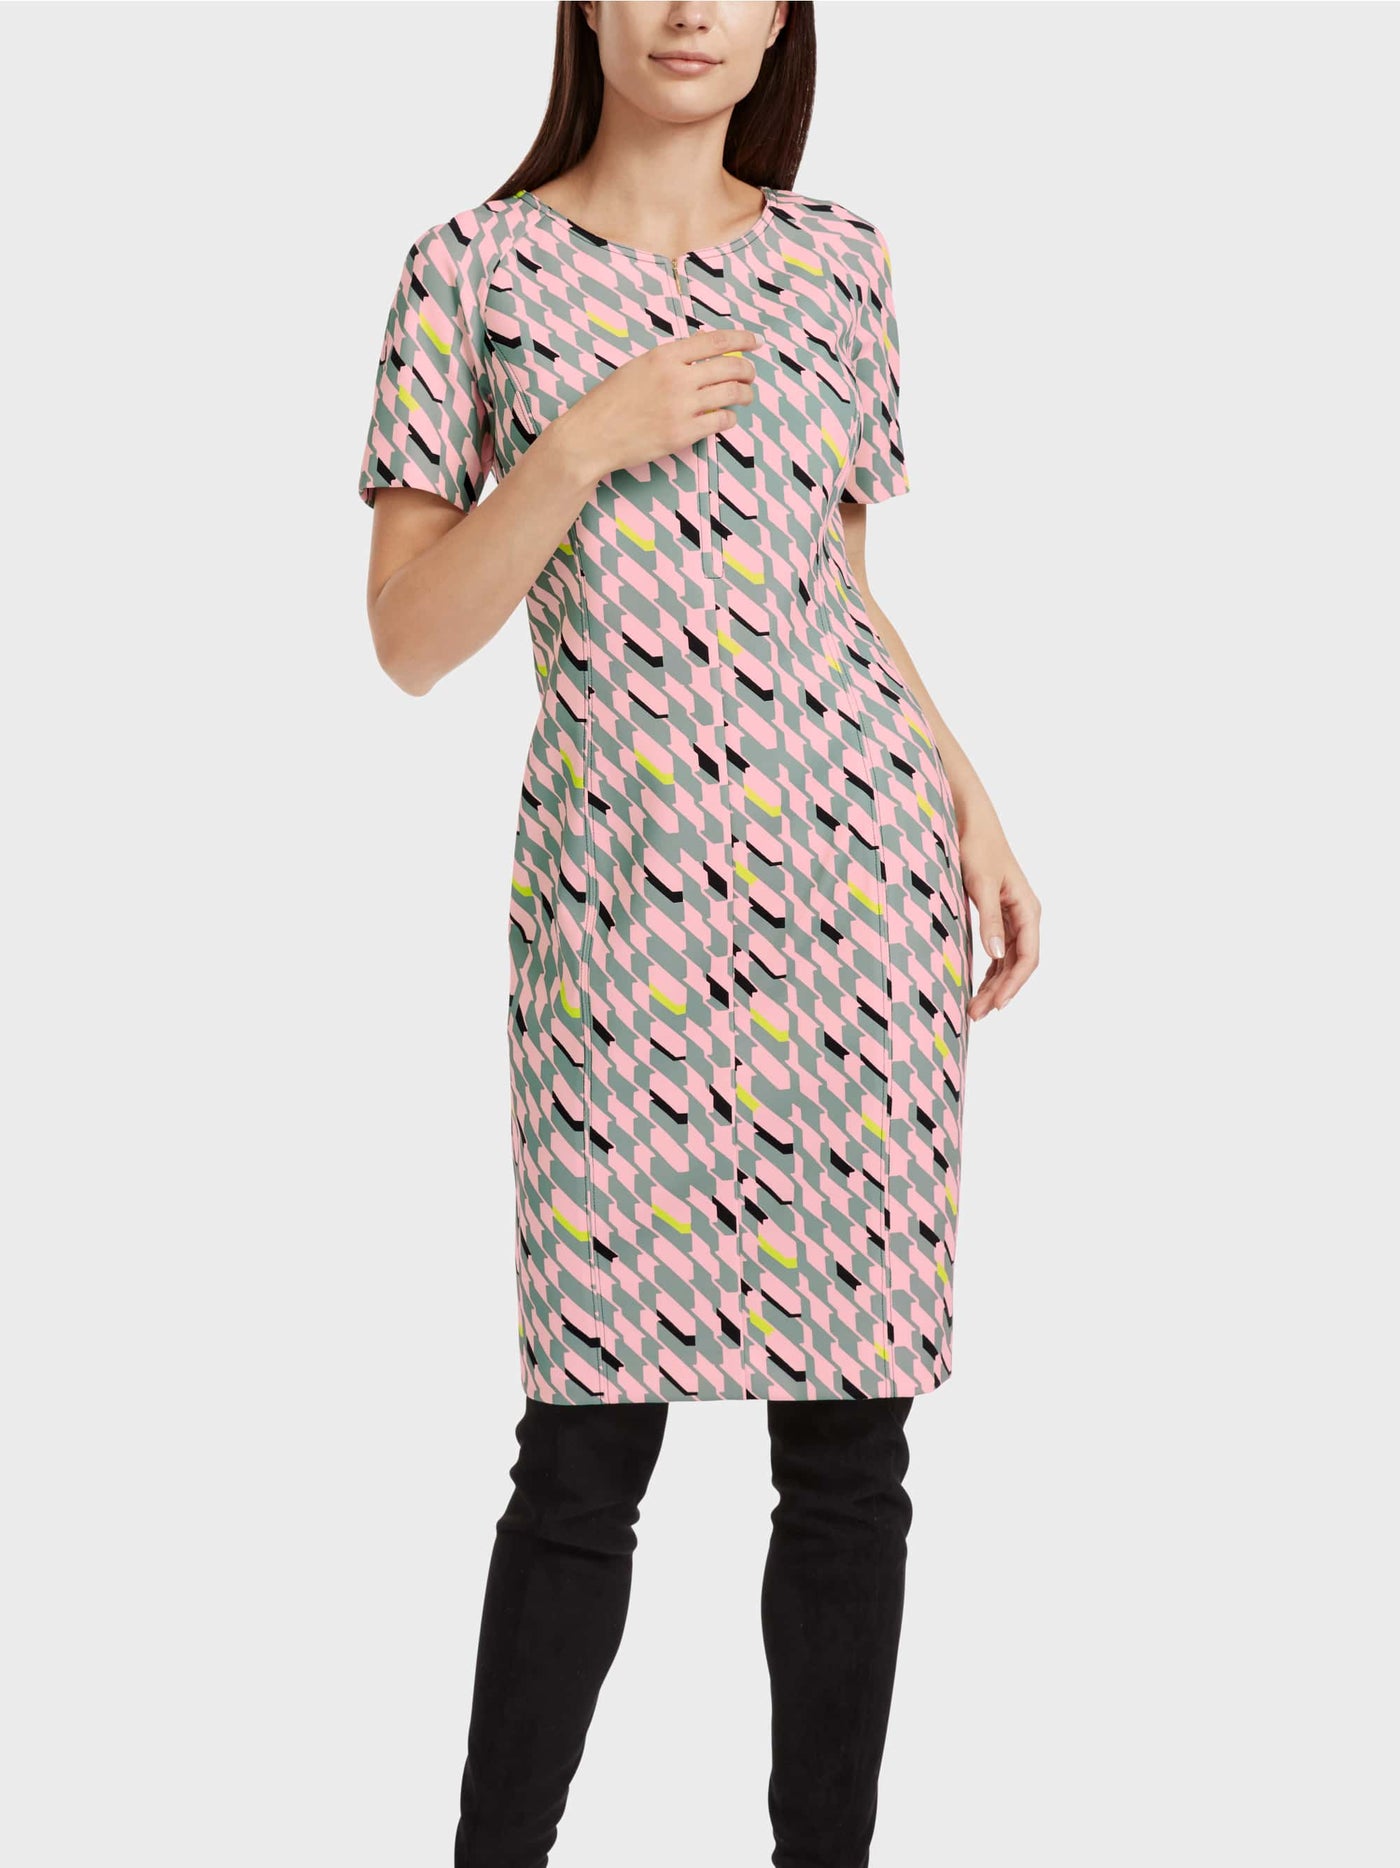 Pink Graphic Design Dress